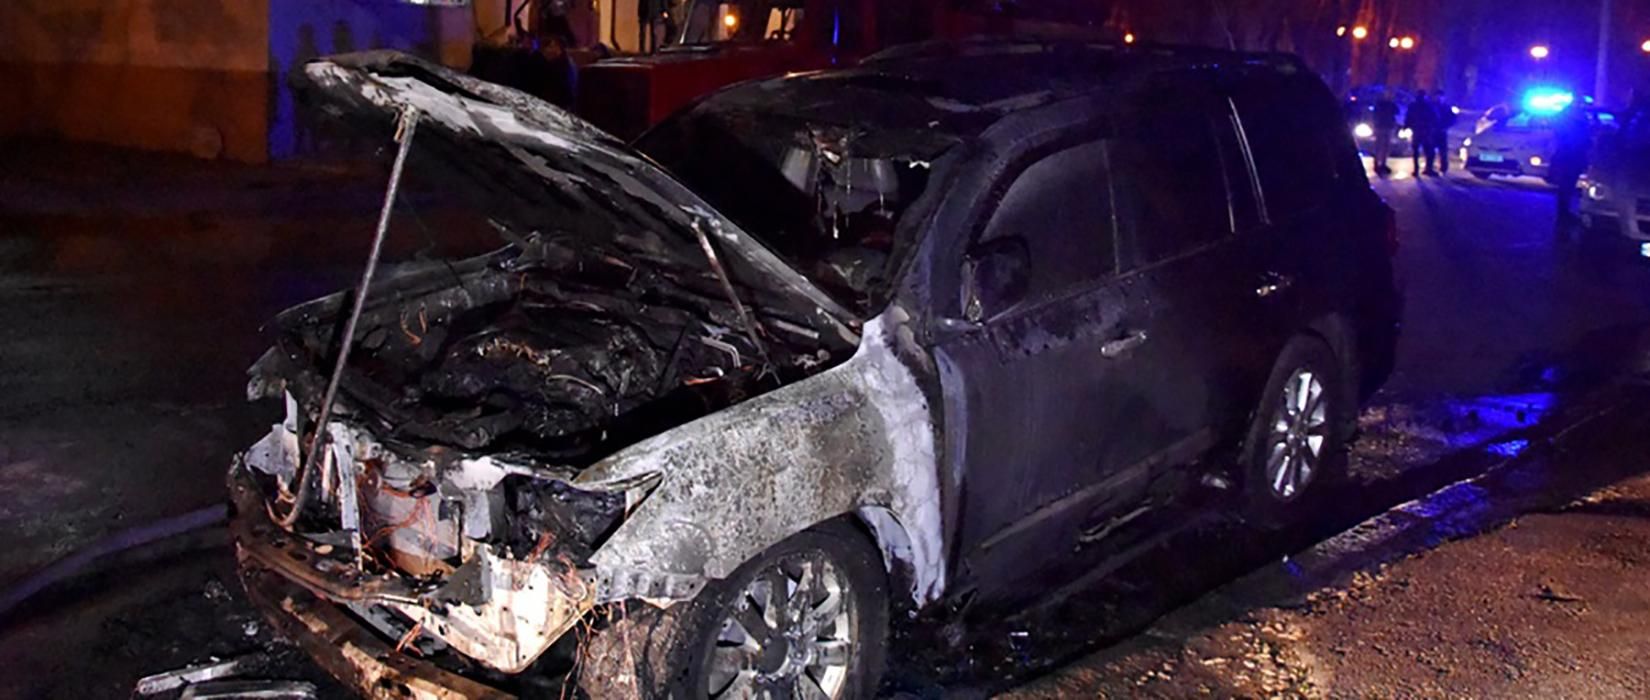 В Одессе сожгли автомобиль соратника Труханова: видео